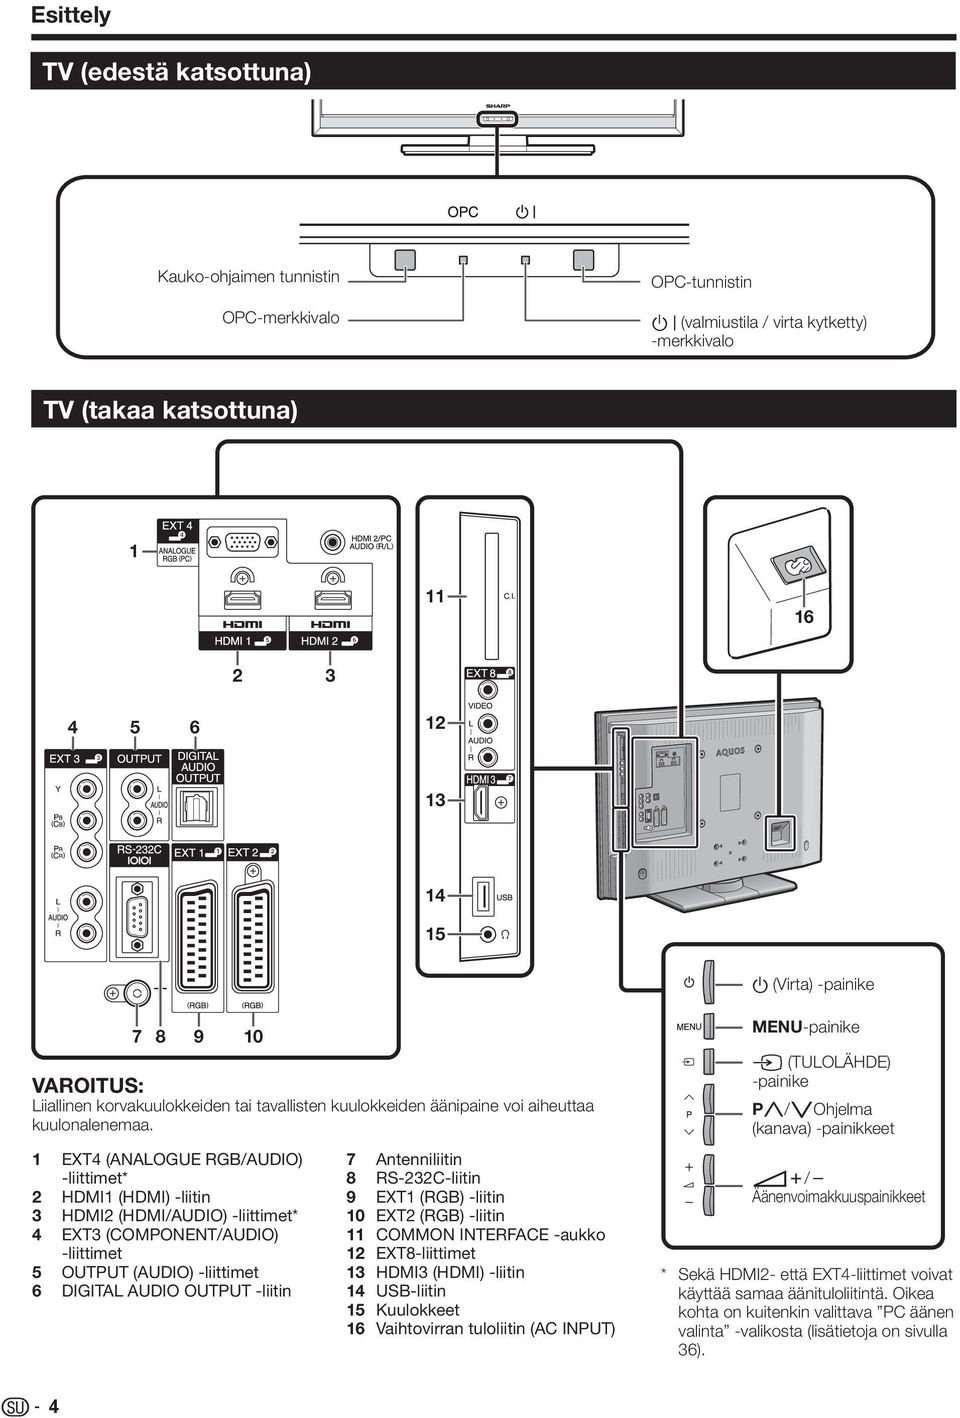 EXT4 (ANALOGUE RGB/AUDIO) -liittimet* HDMI (HDMI) -liitin HDMI (HDMI/AUDIO) -liittimet* EXT (COMPONENT/AUDIO) -liittimet OUTPUT (AUDIO) -liittimet DIGITAL AUDIO OUTPUT -liitin 7 8 9 0 4 5 6